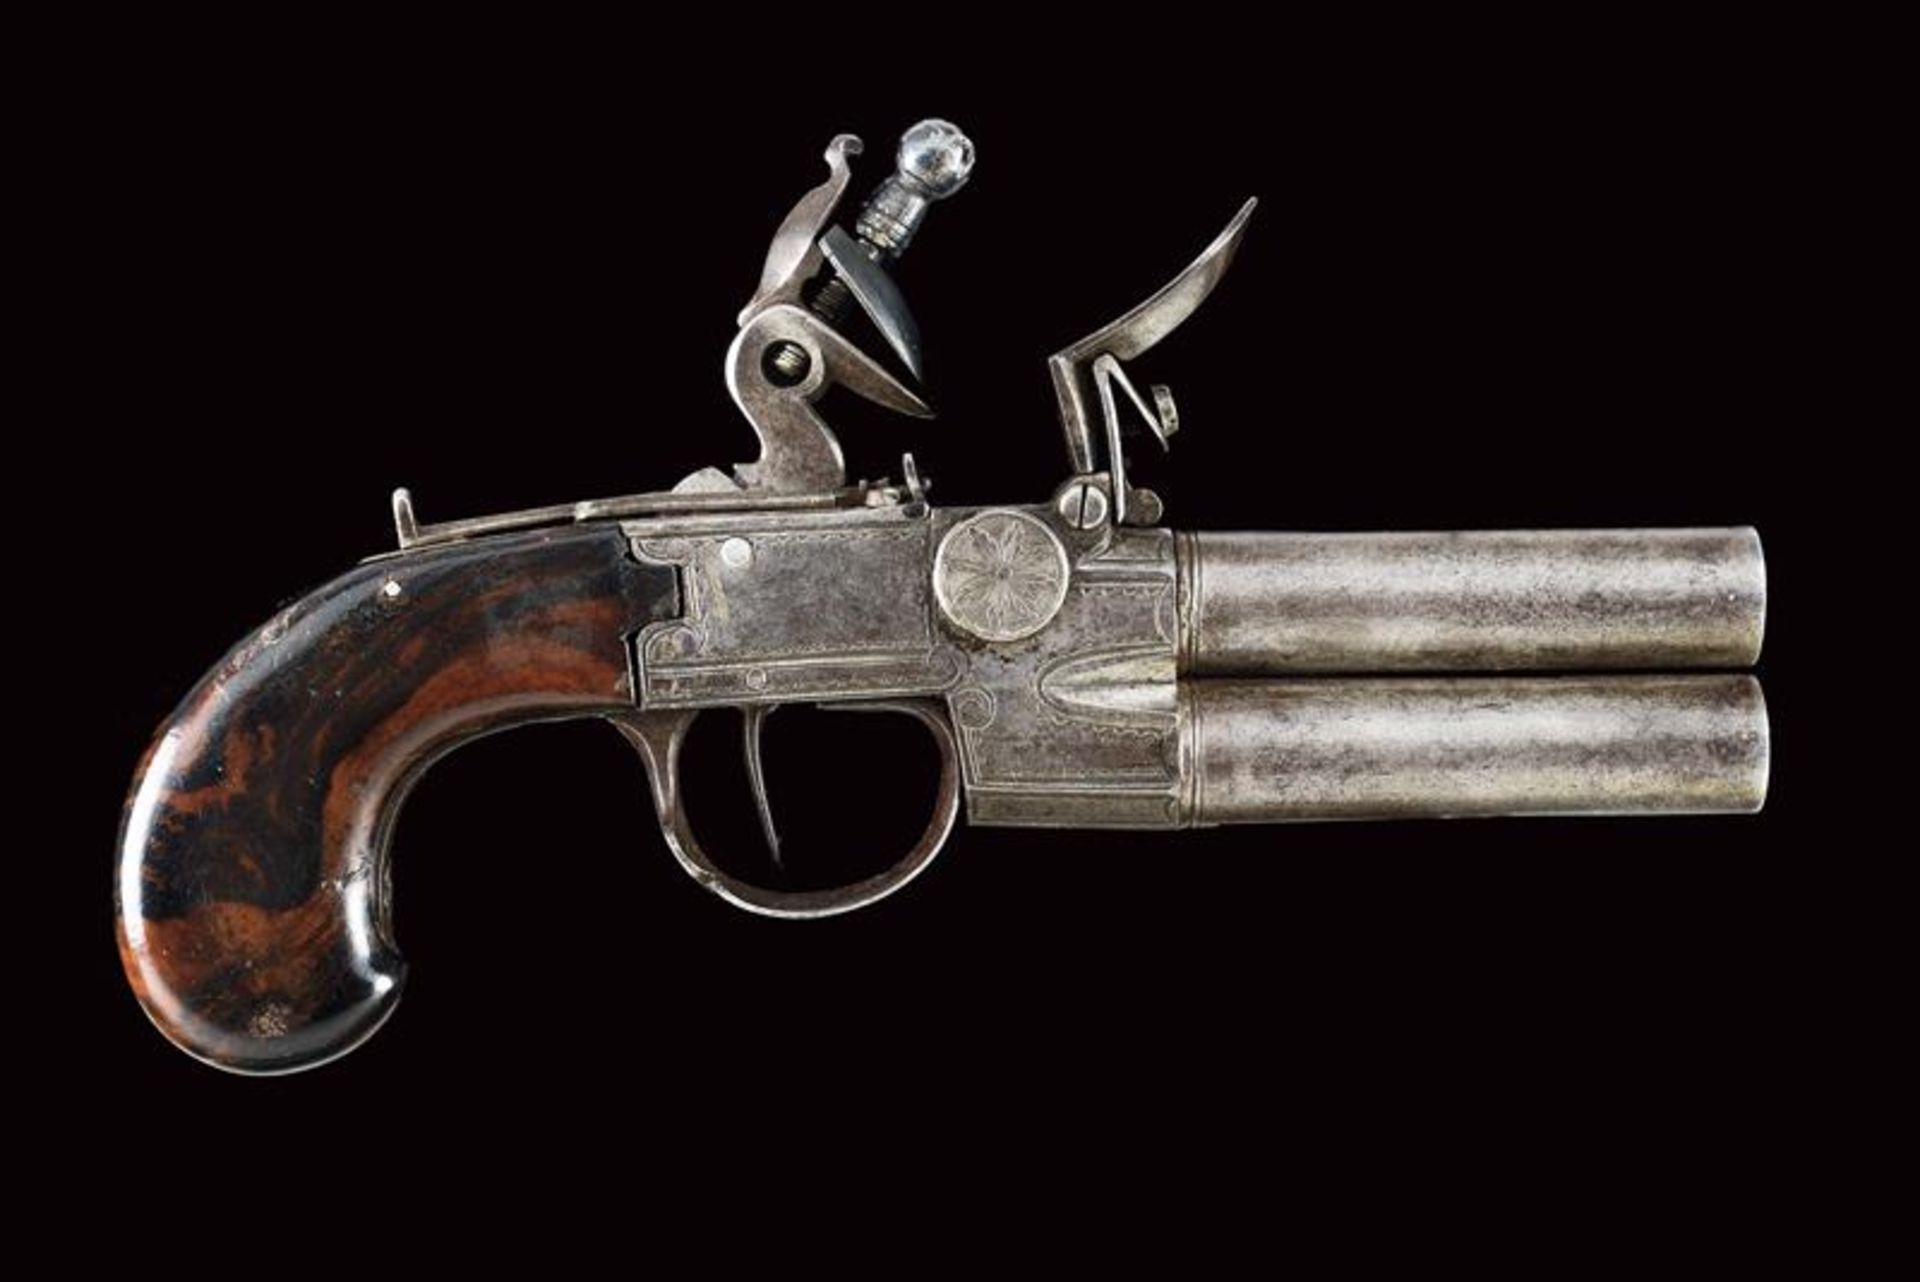 An over-and under-barreled flintlock pocket pistol